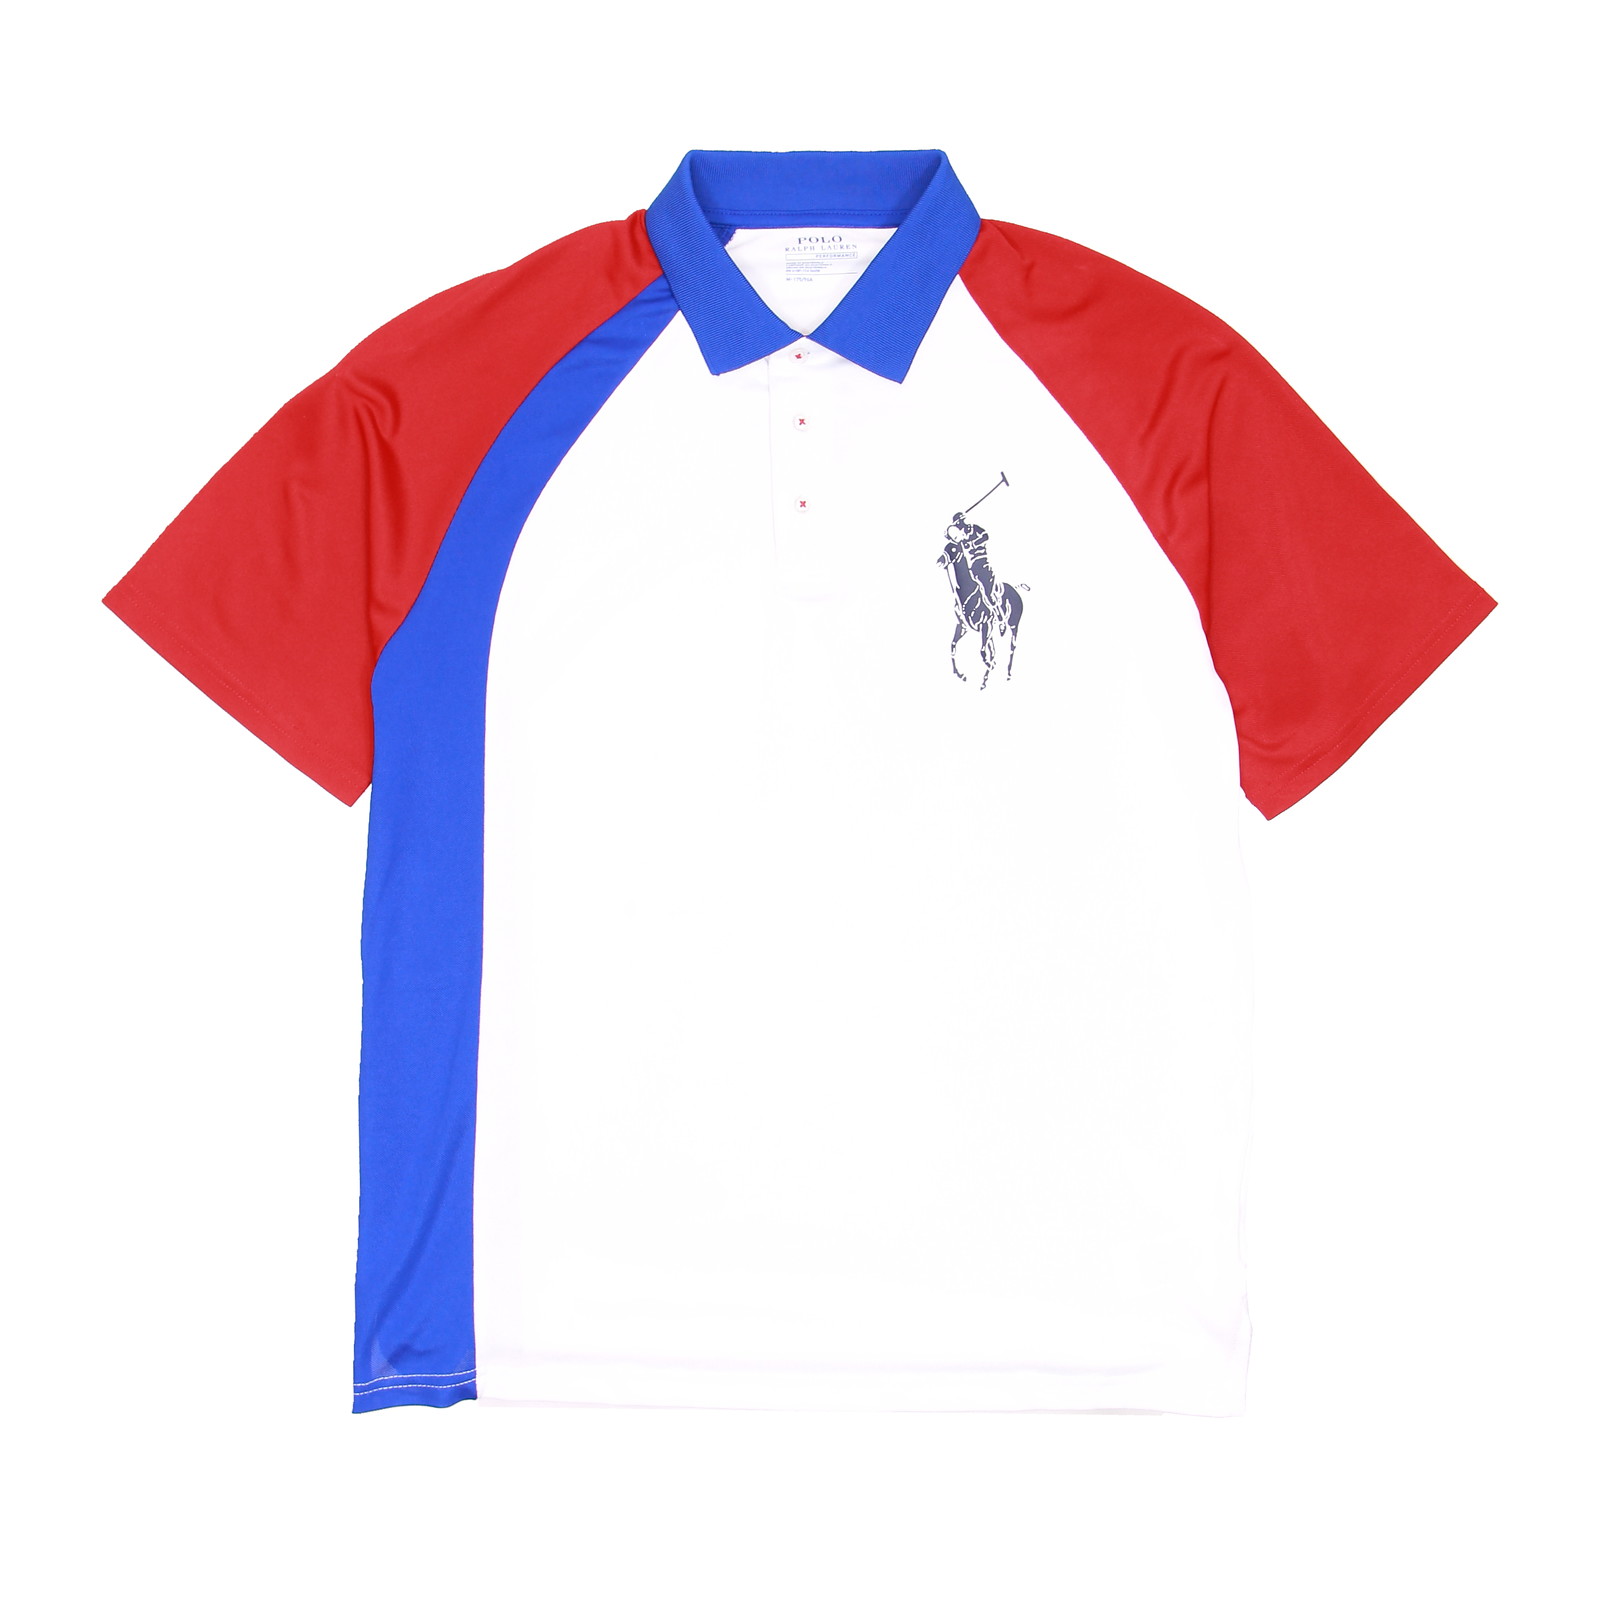 Ralph Lauren POLO Ralph Lauren 'Performance' Mens Red/White/Blue Color Block Polo Shirt $98